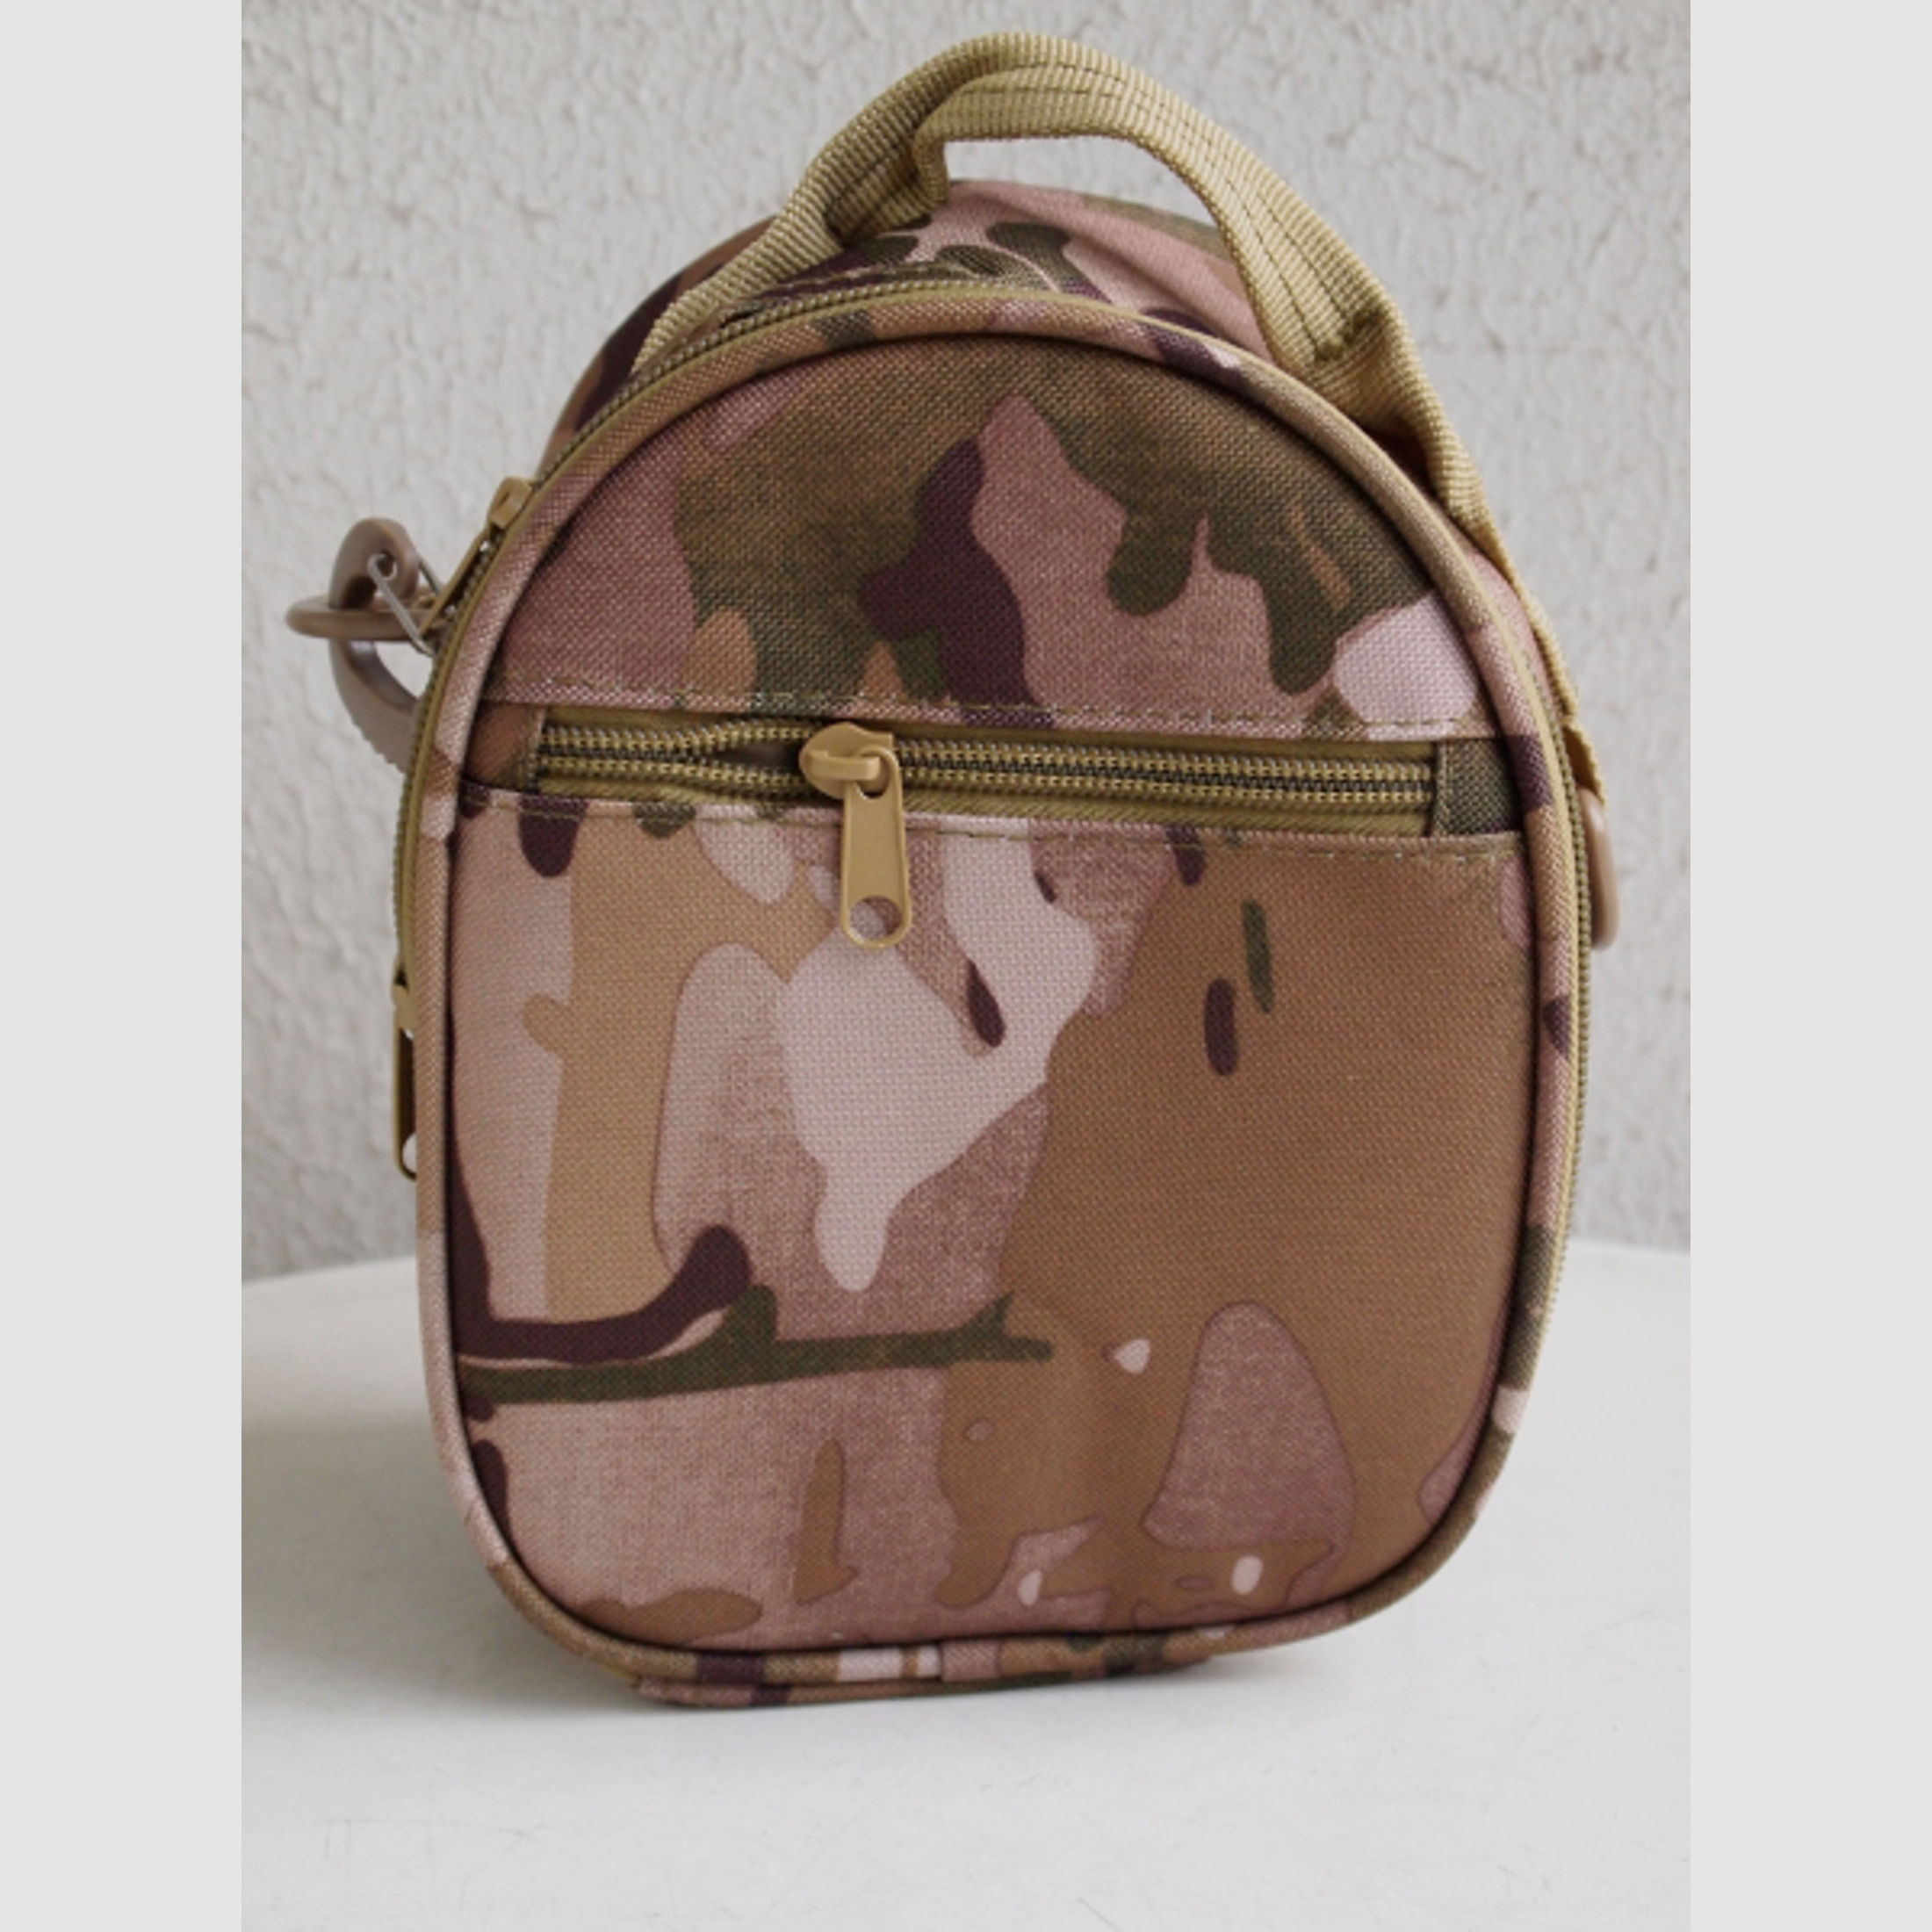 Militär Fernglas Tasche für 8x30 Ferngläser, Fernglas oder Gehörschutz, camo, tactical bag